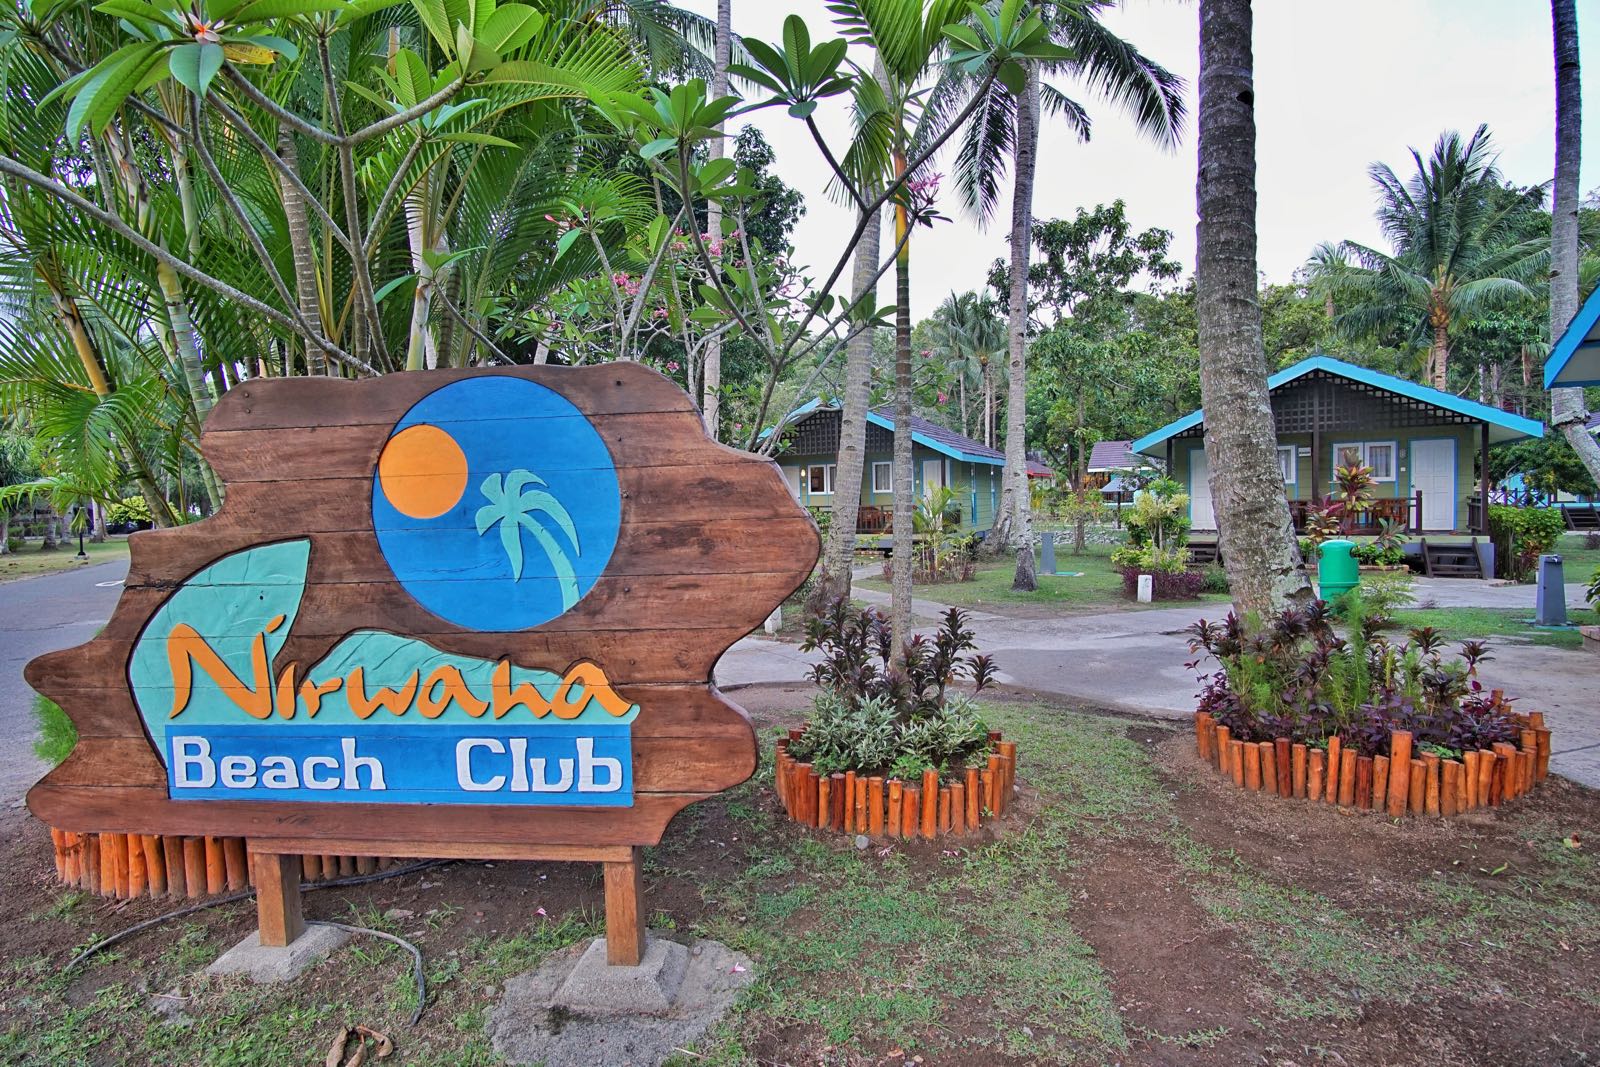 Nirwana Beach Club